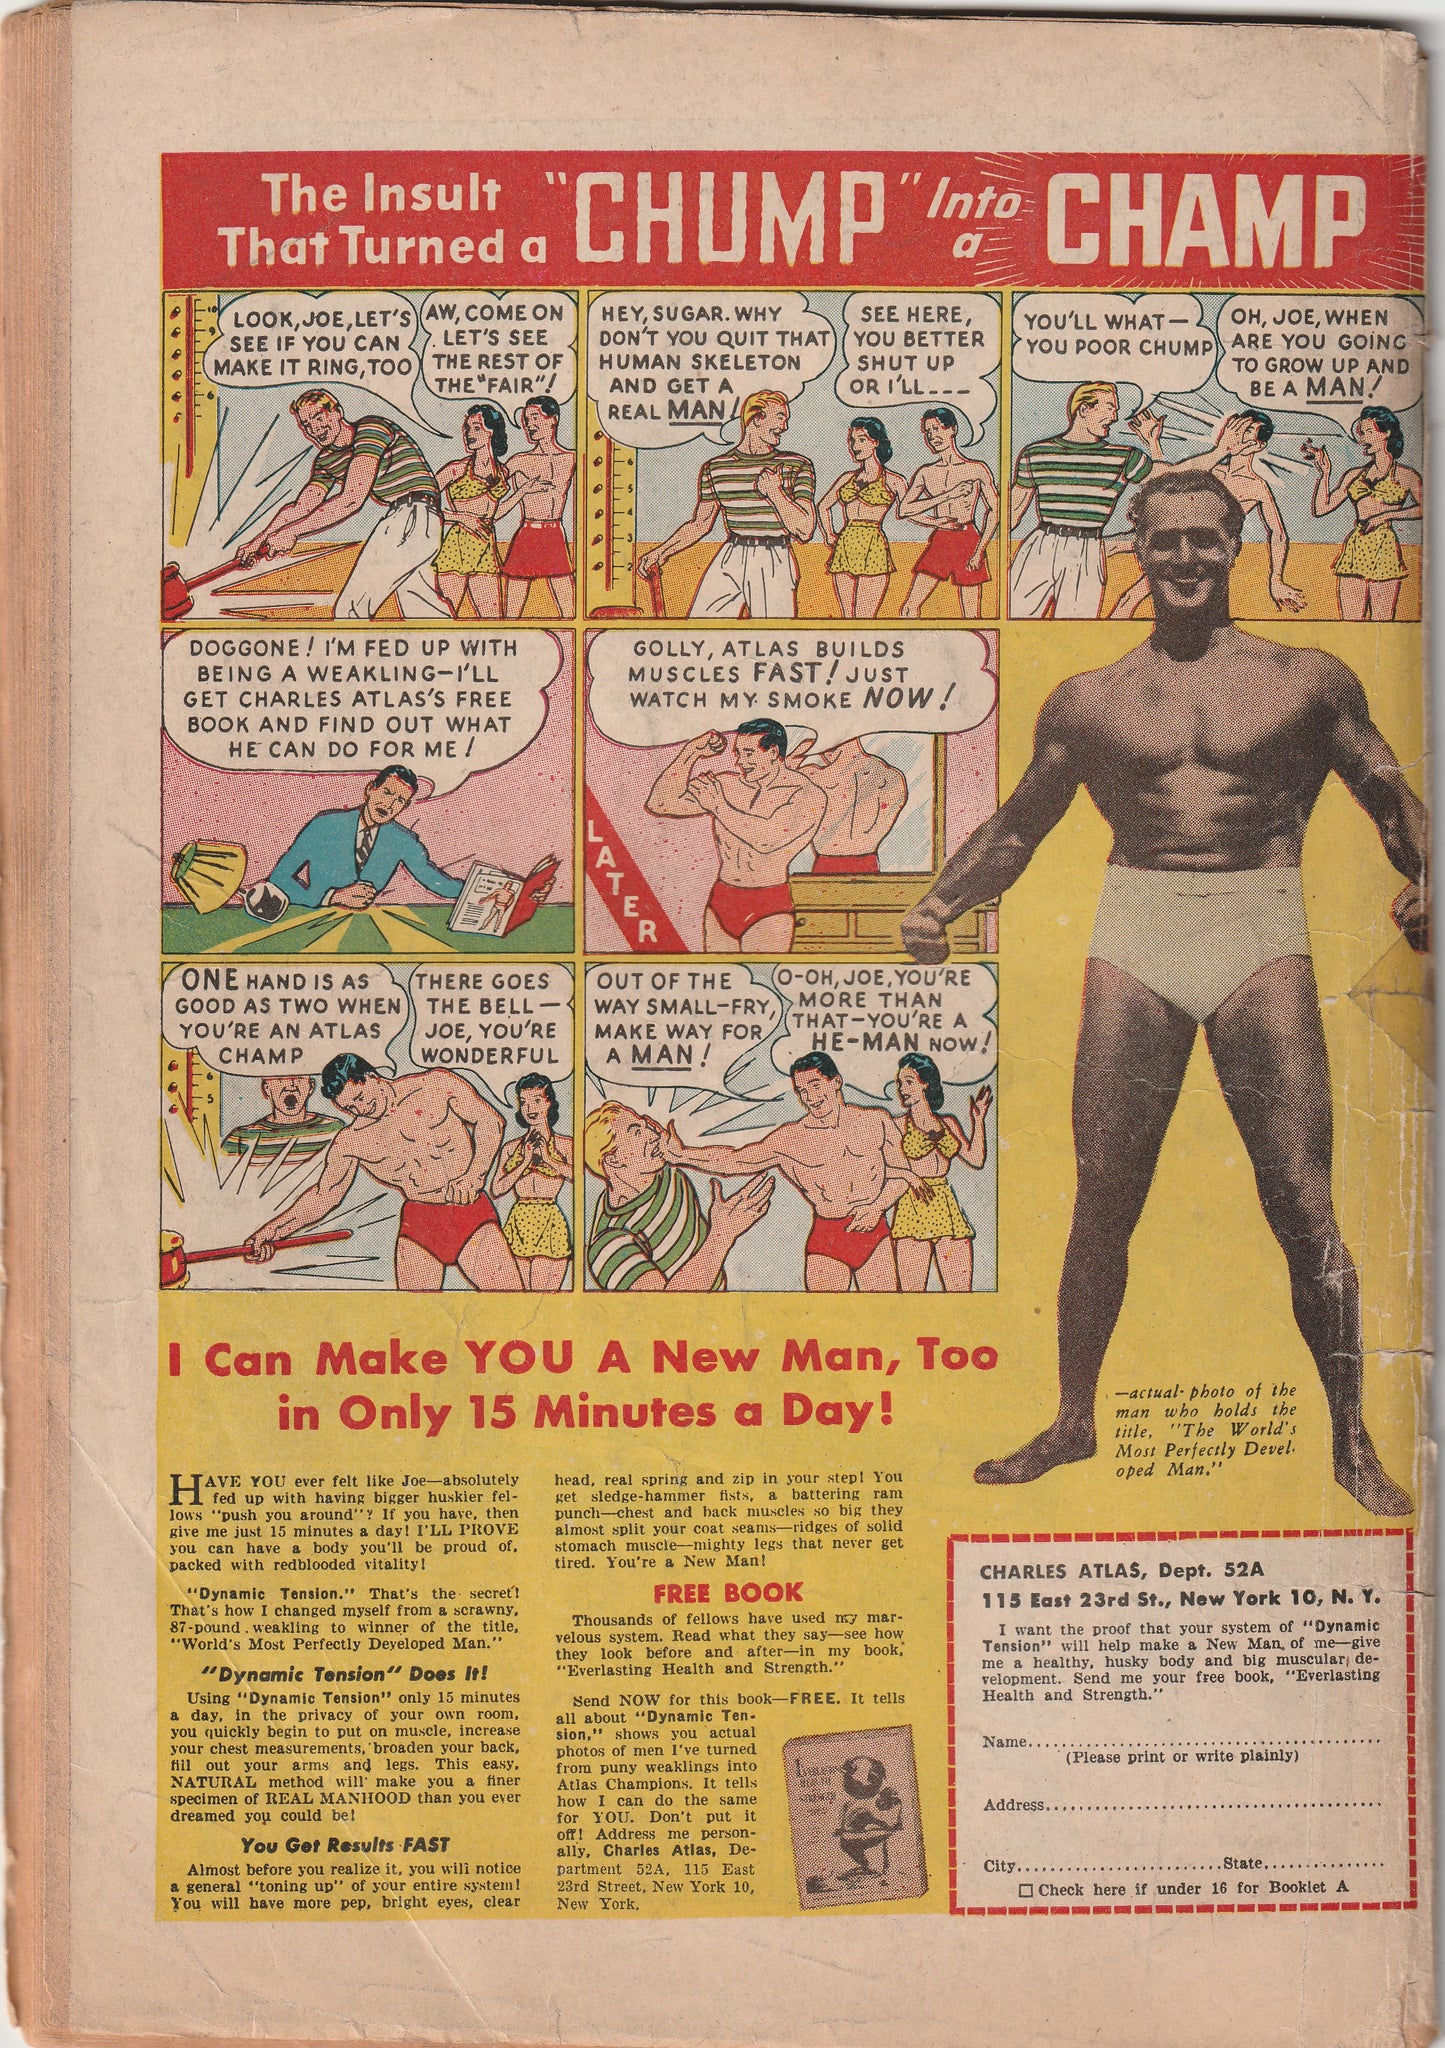 YellowJacket Comics #8 (1946) - Tales of Terror